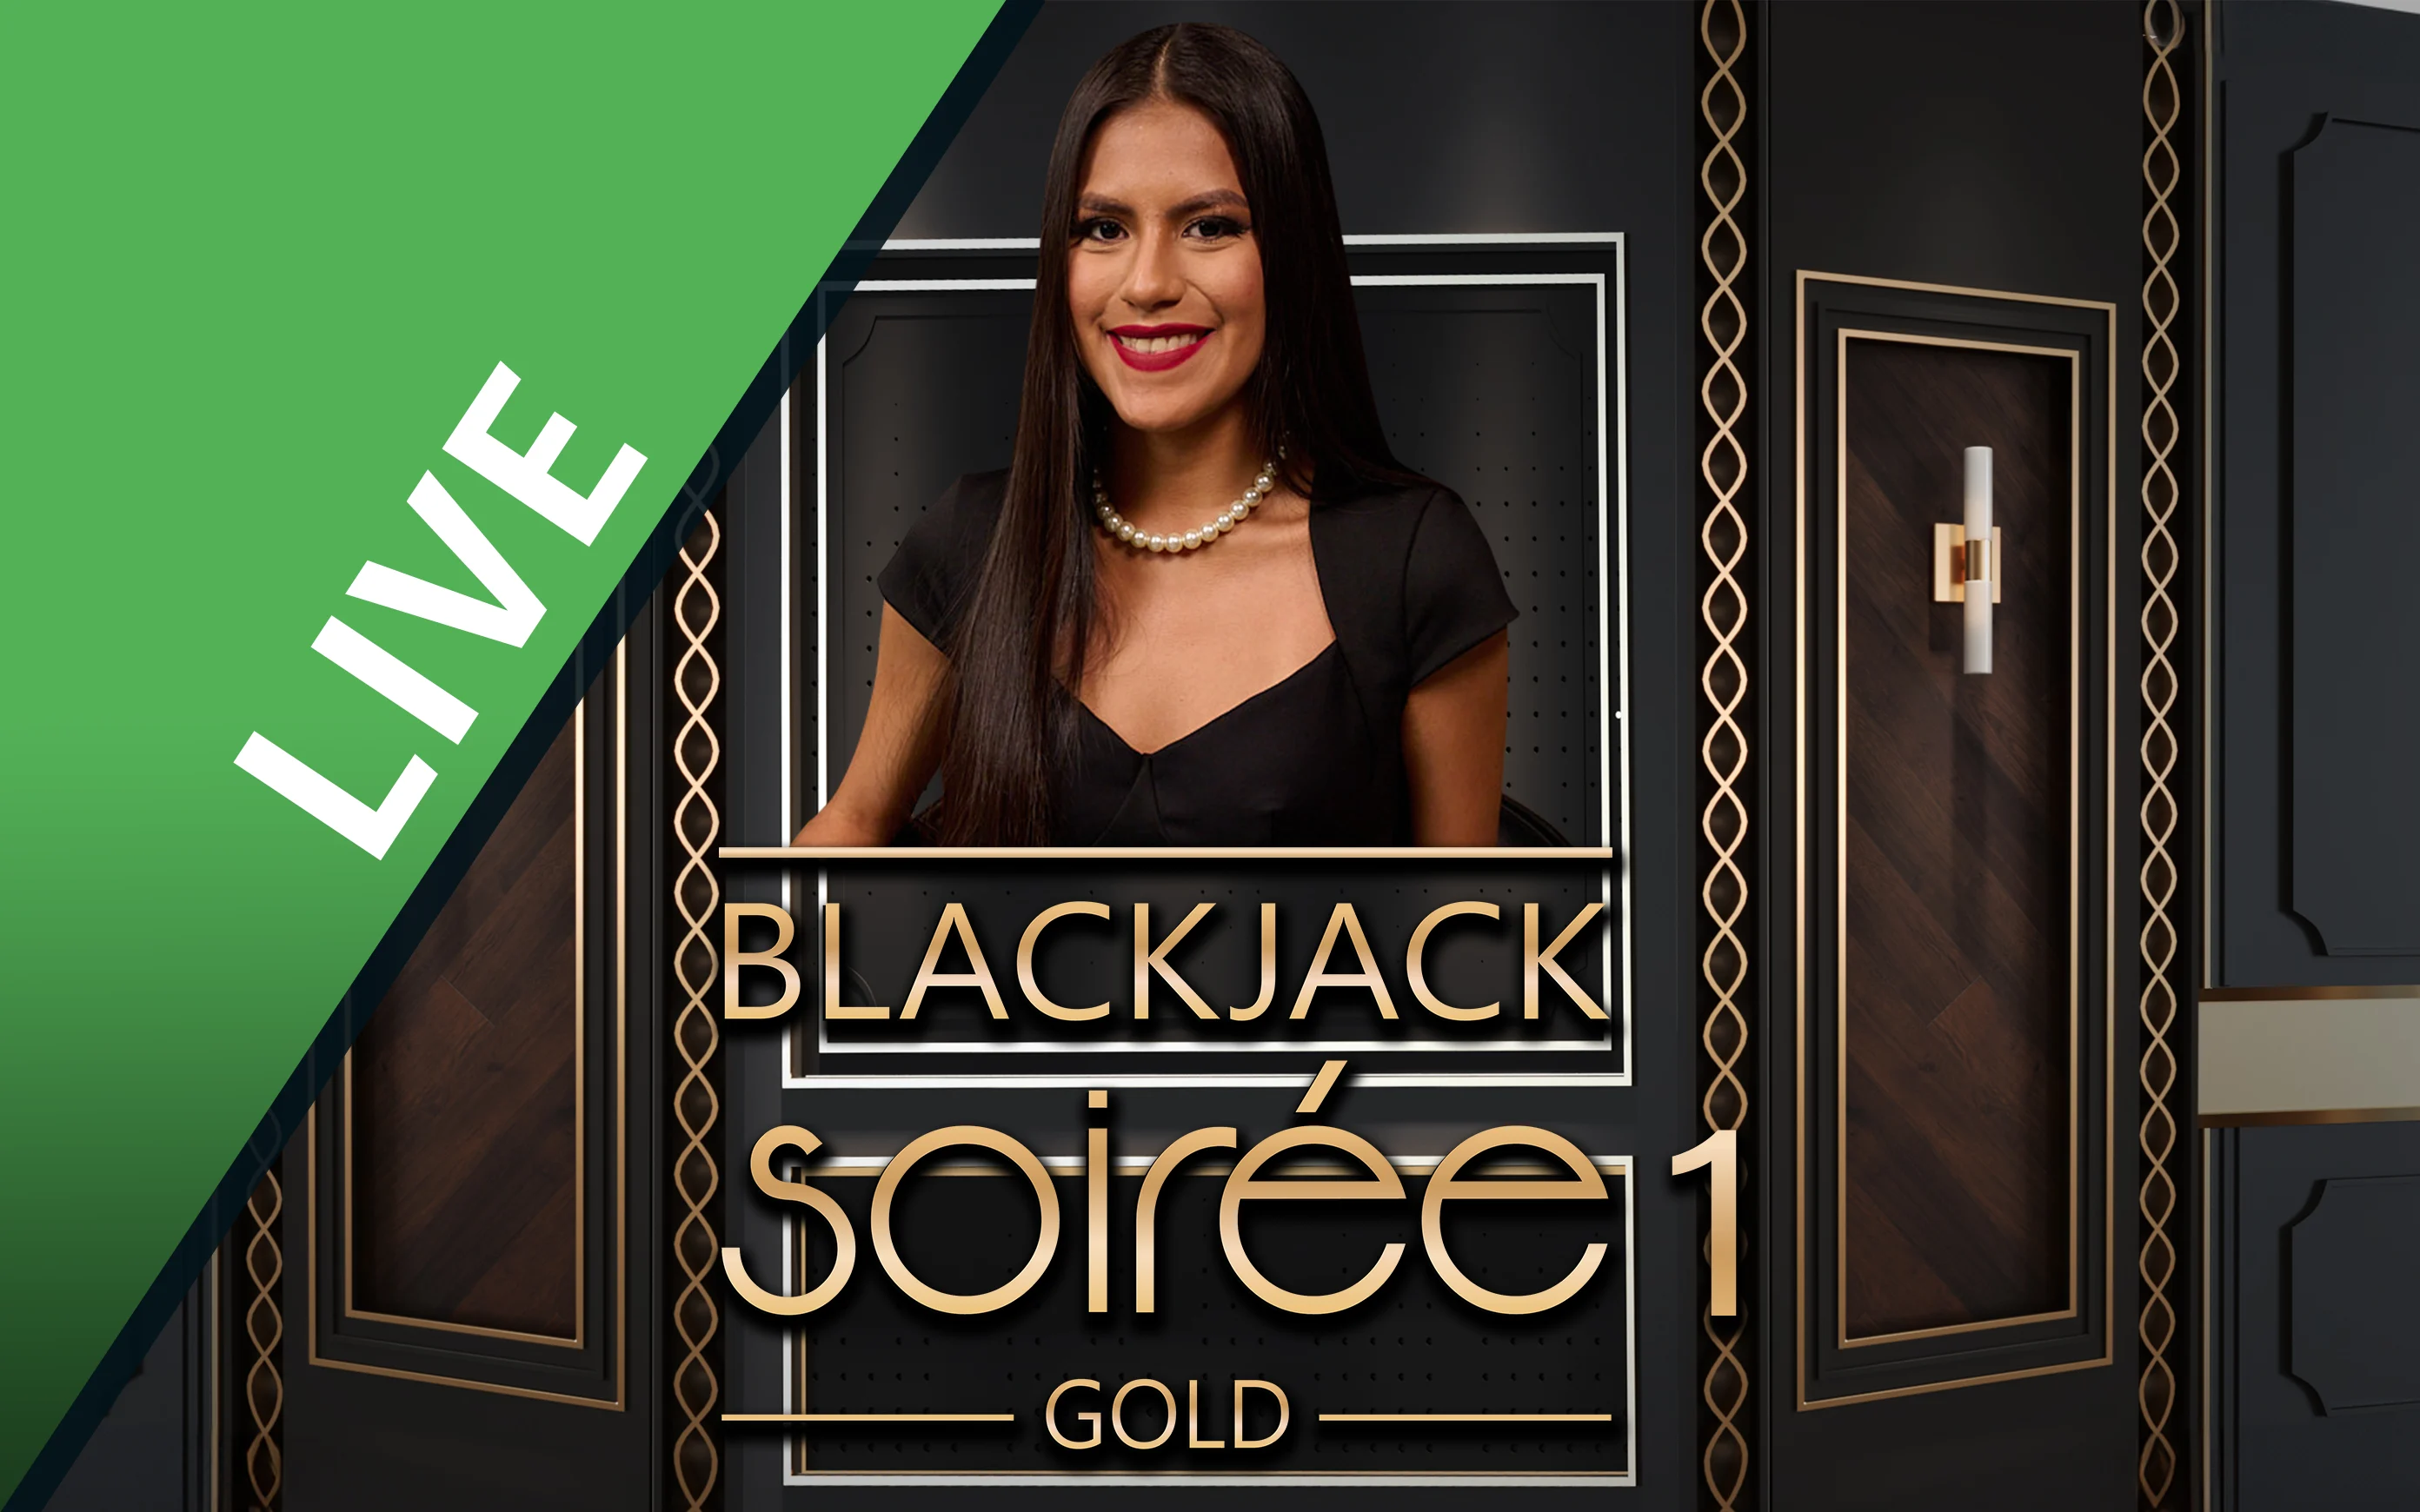 Speel Blackjack Soirée Gold 1 op Starcasino.be online casino